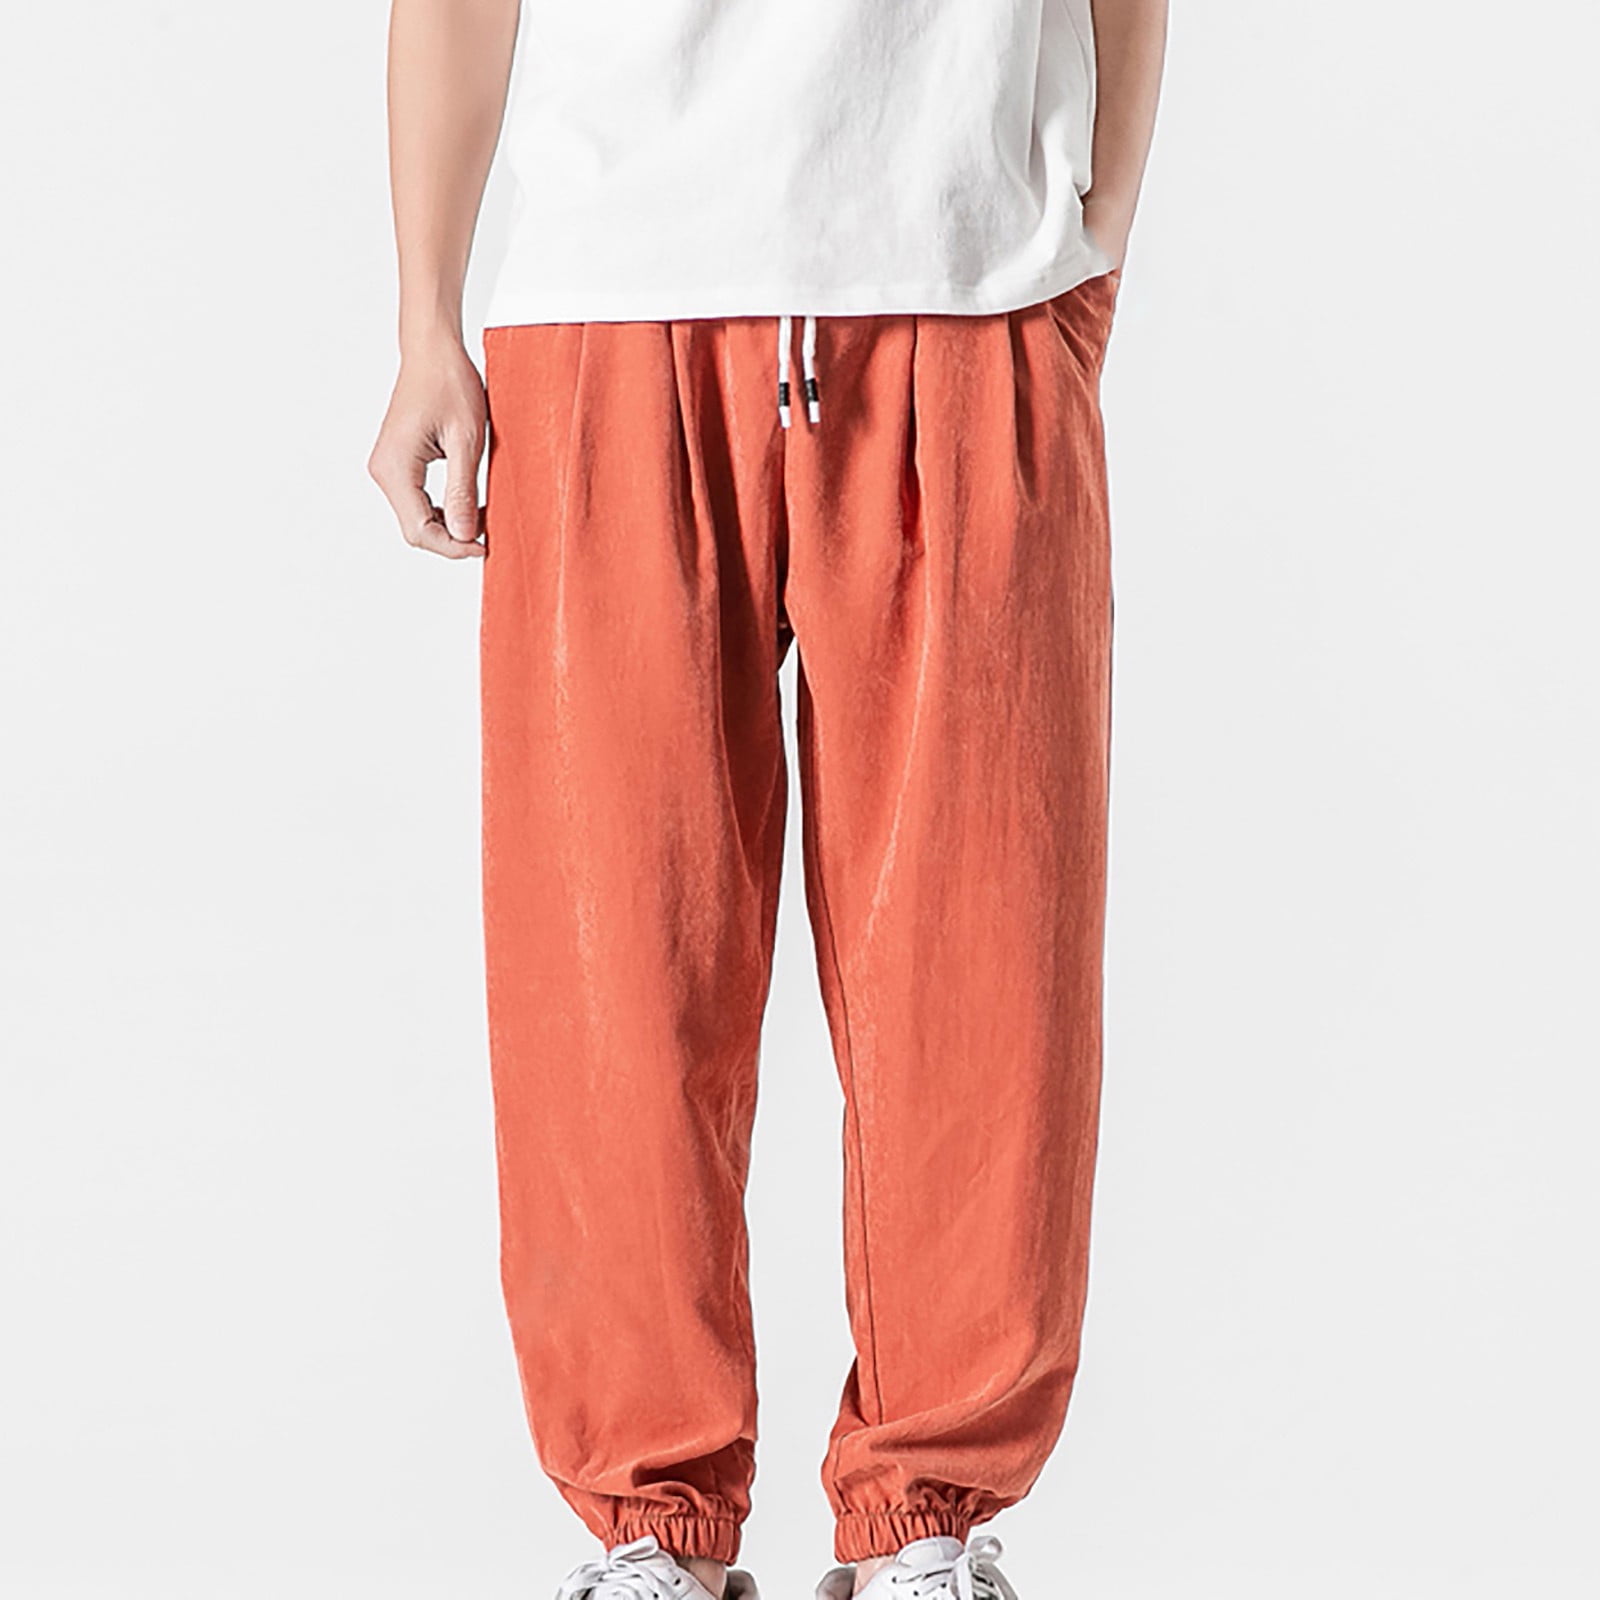 EchfiProm Orange Pants For Men Clearance Sweatpants Pants Jogger ...